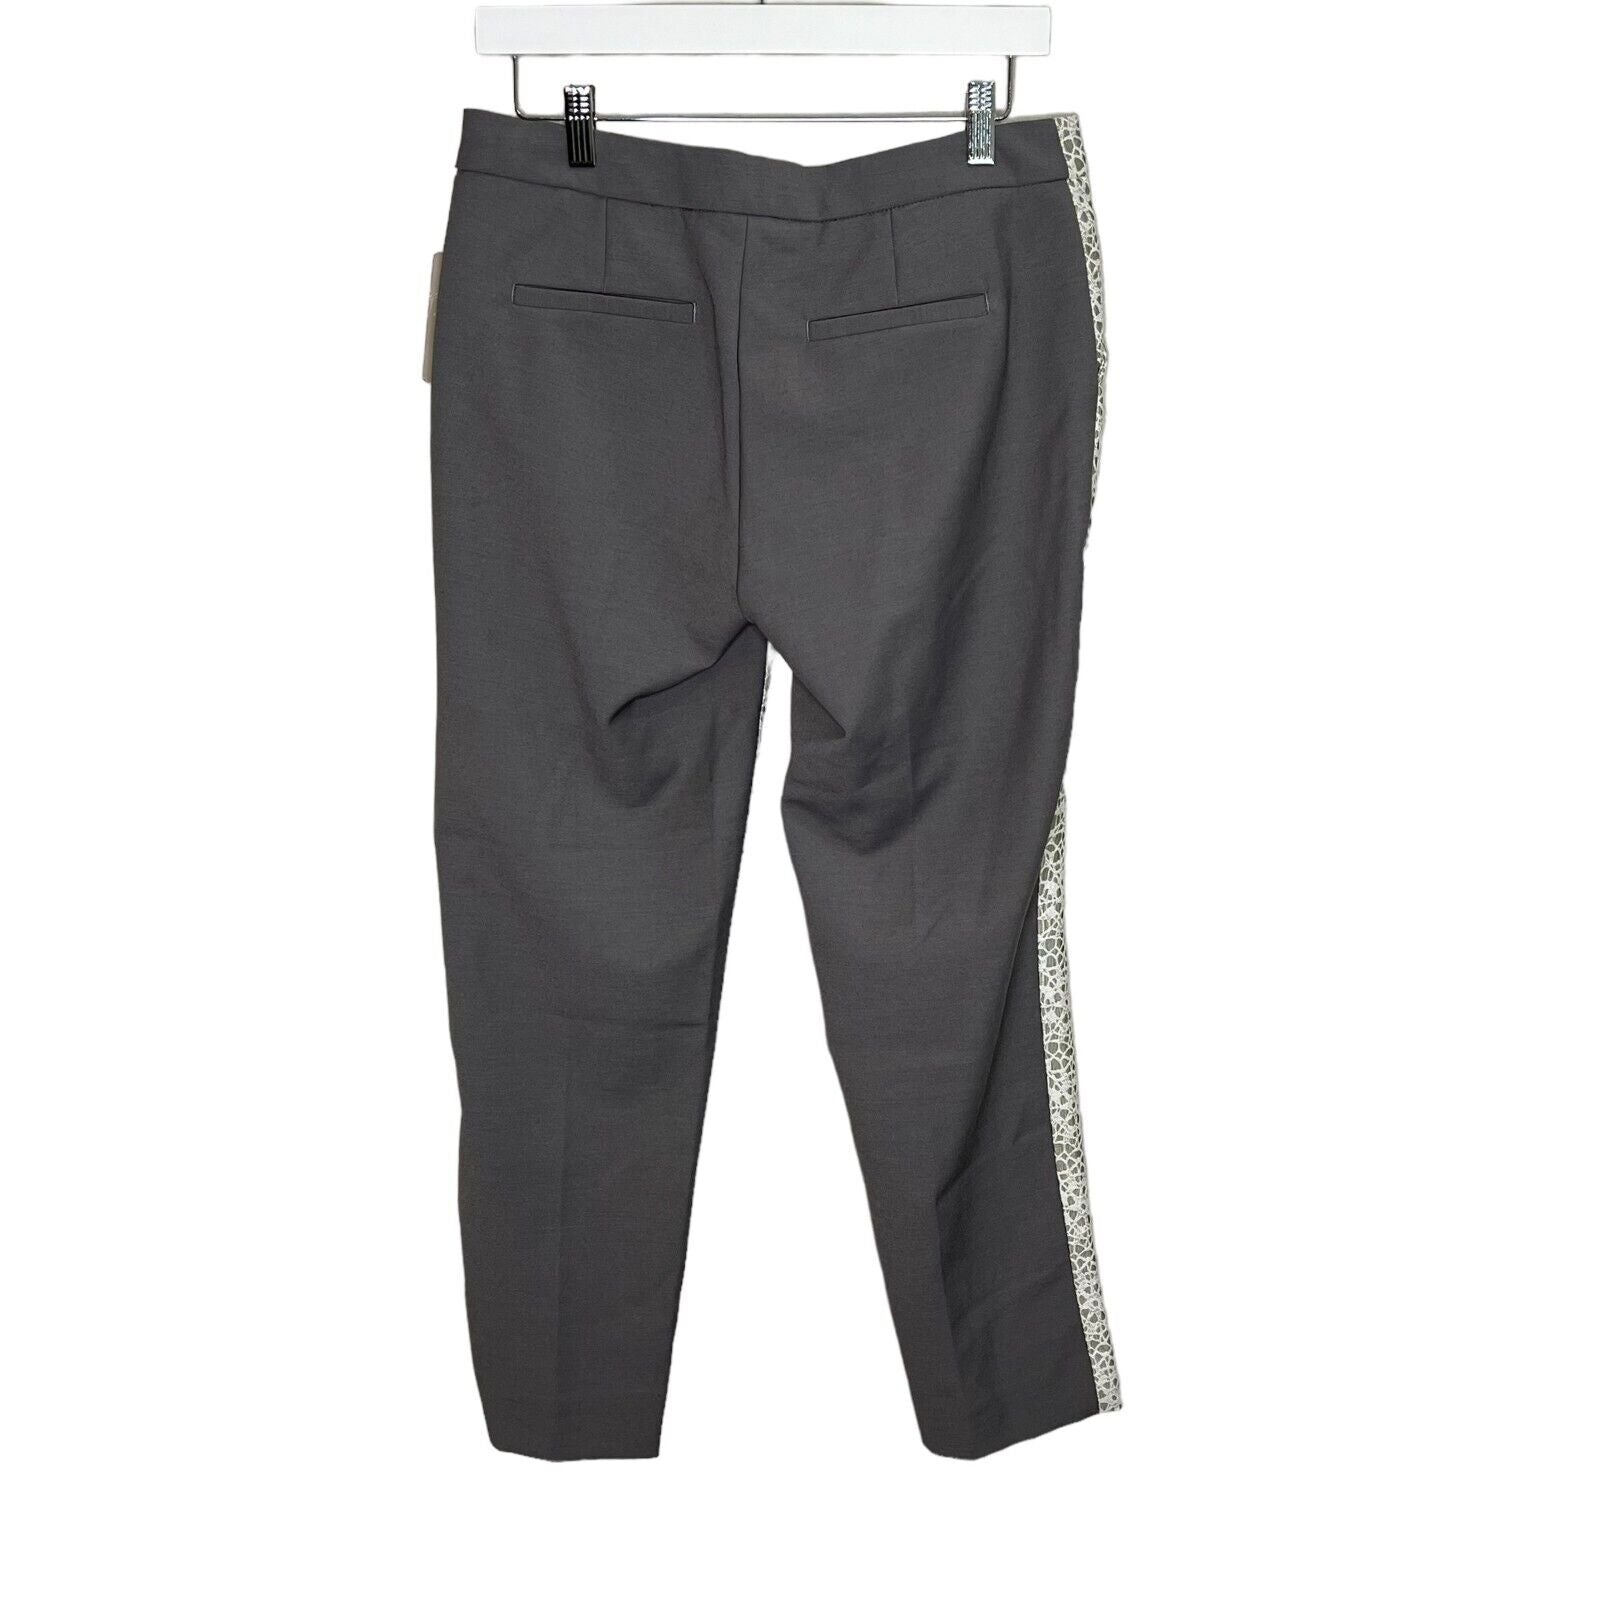 Anthropologie Elevenses Spliced Jacquard Slim Gray Print Pants Size 6 NEW